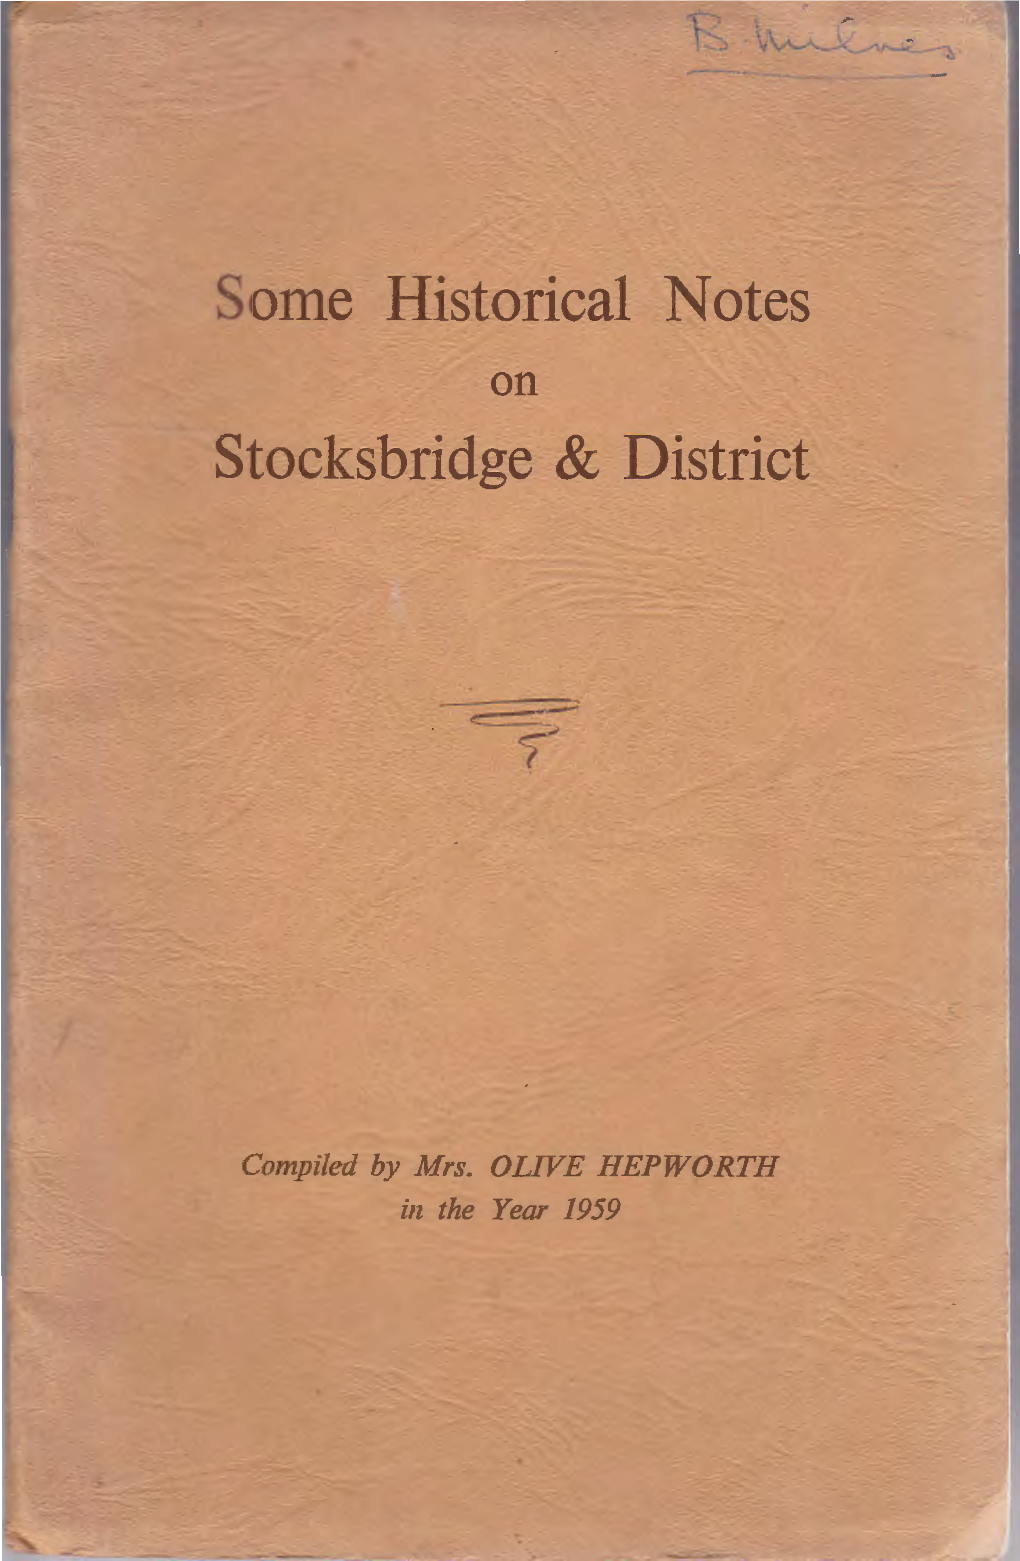 Some Historical Notes on Stocksbridge & District